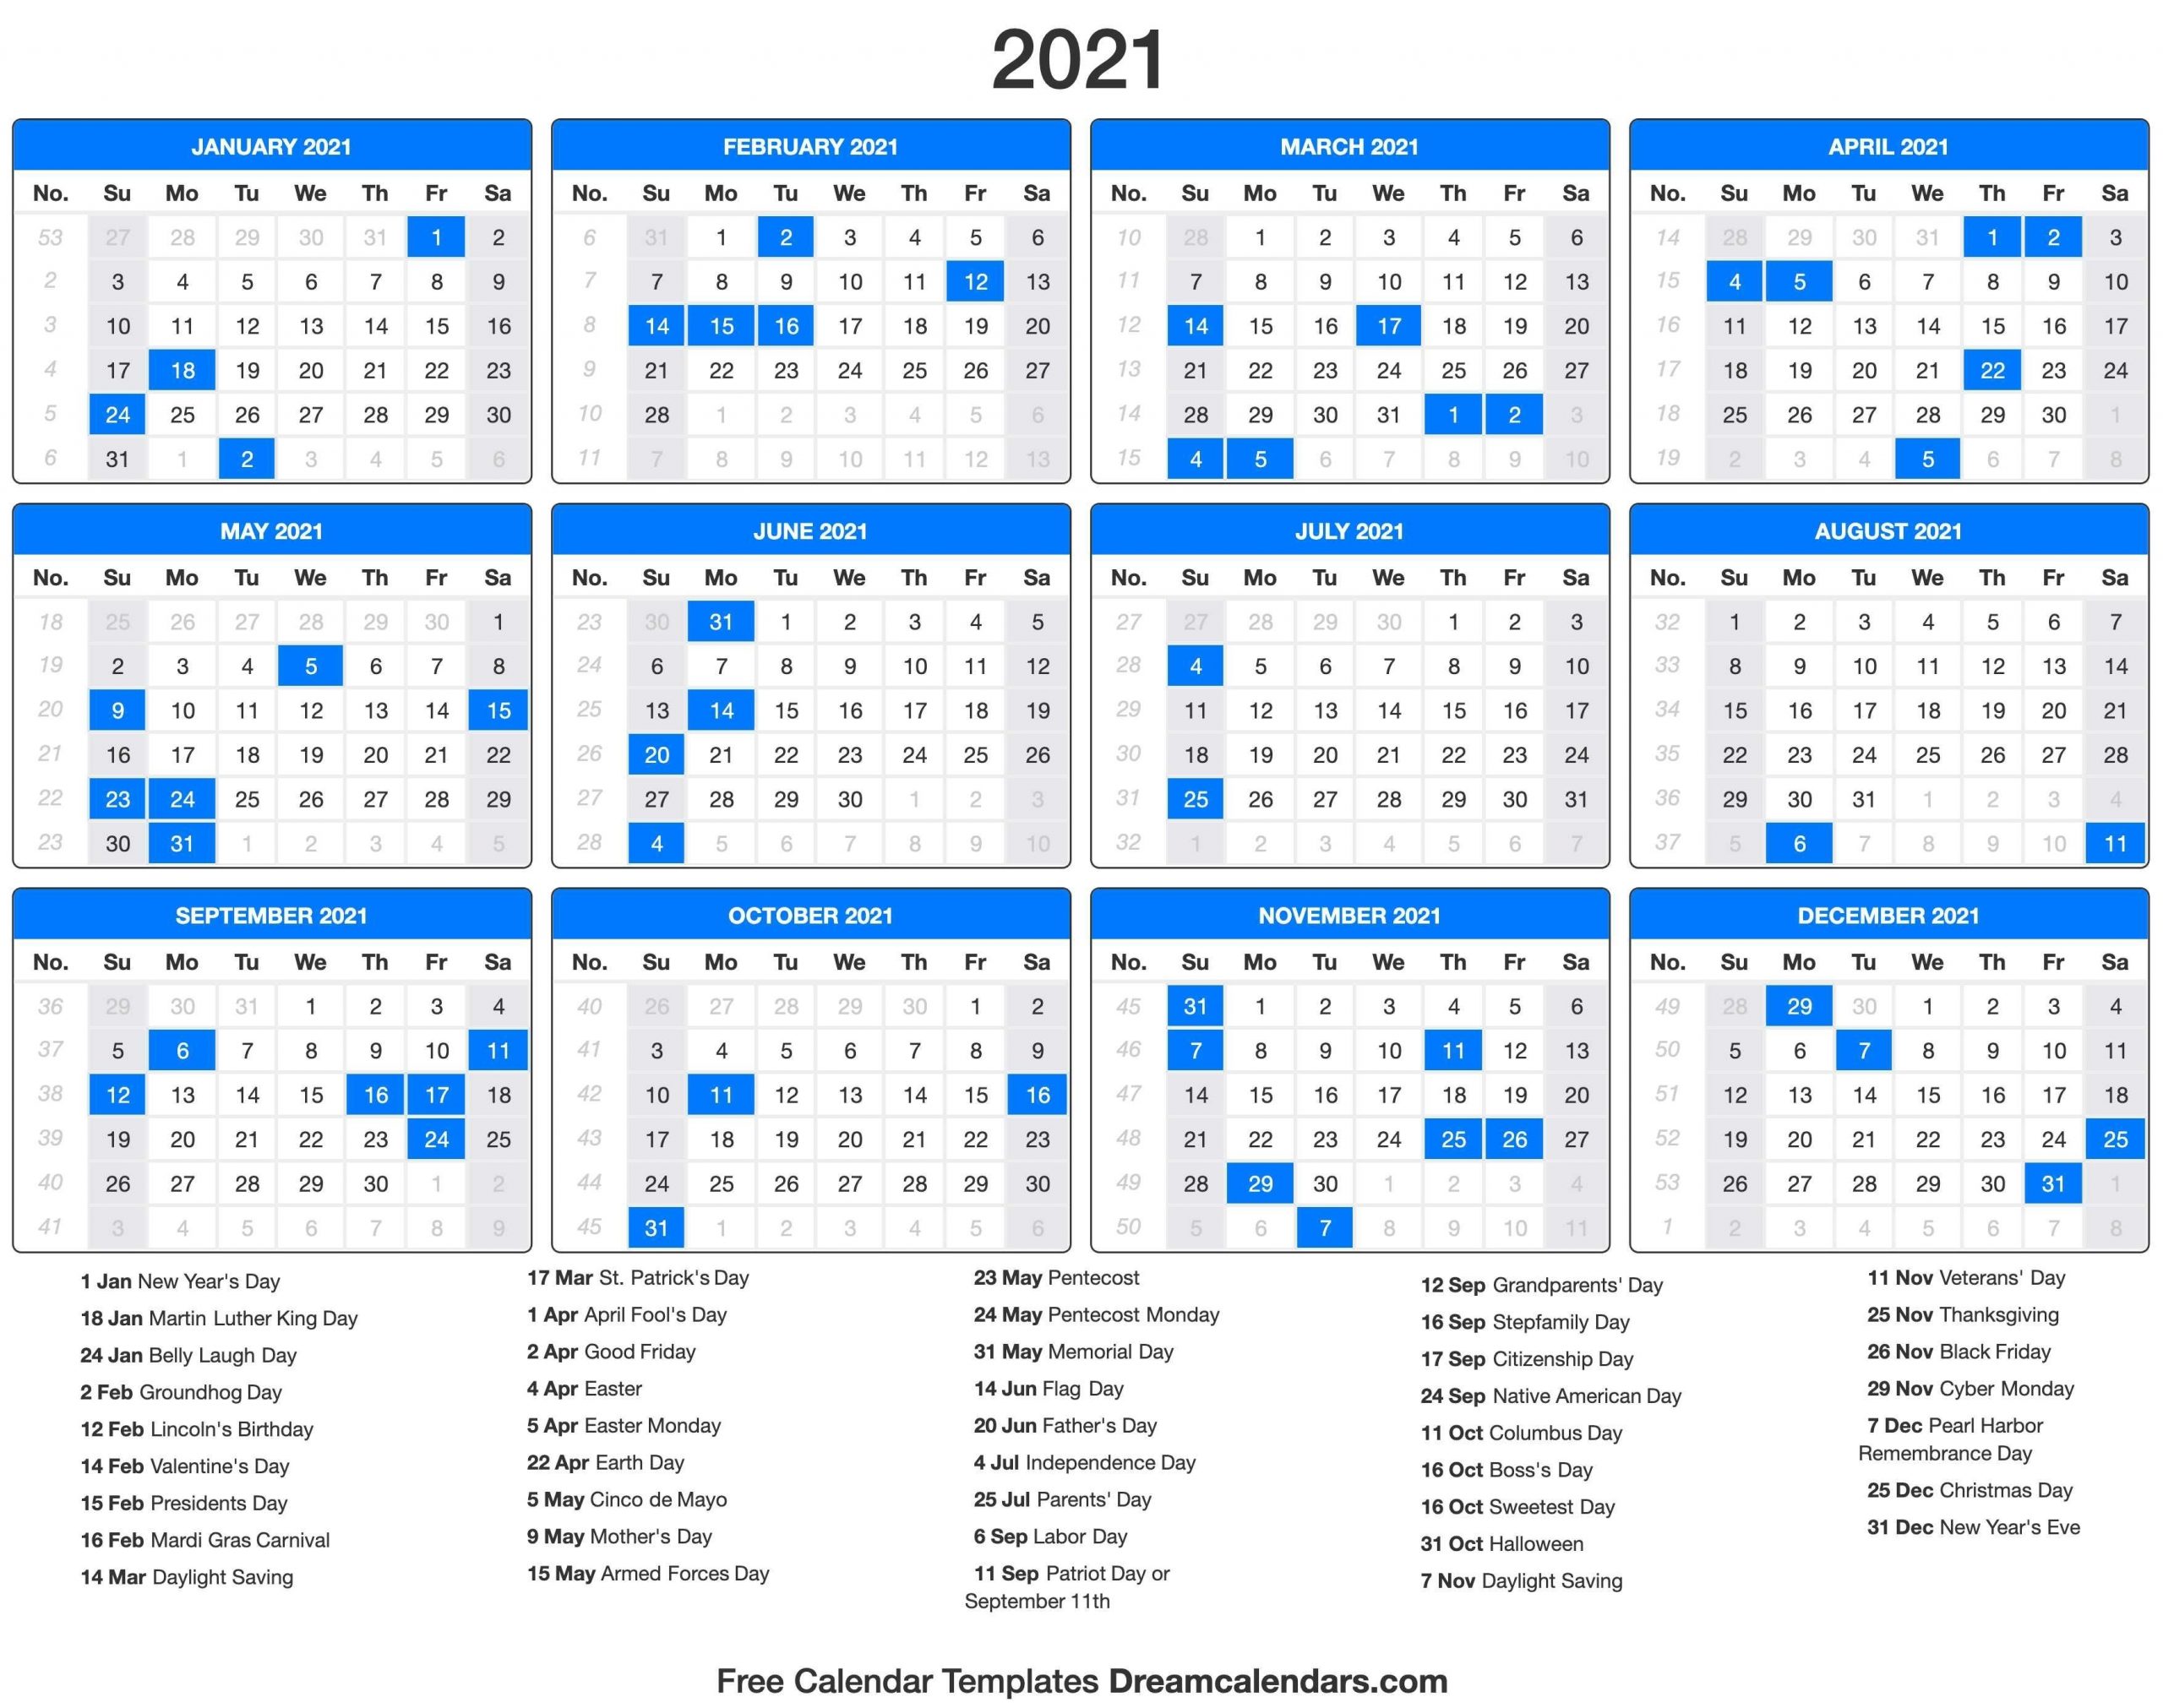 Dream Calendars (Dreamcalendars) On Pinterest